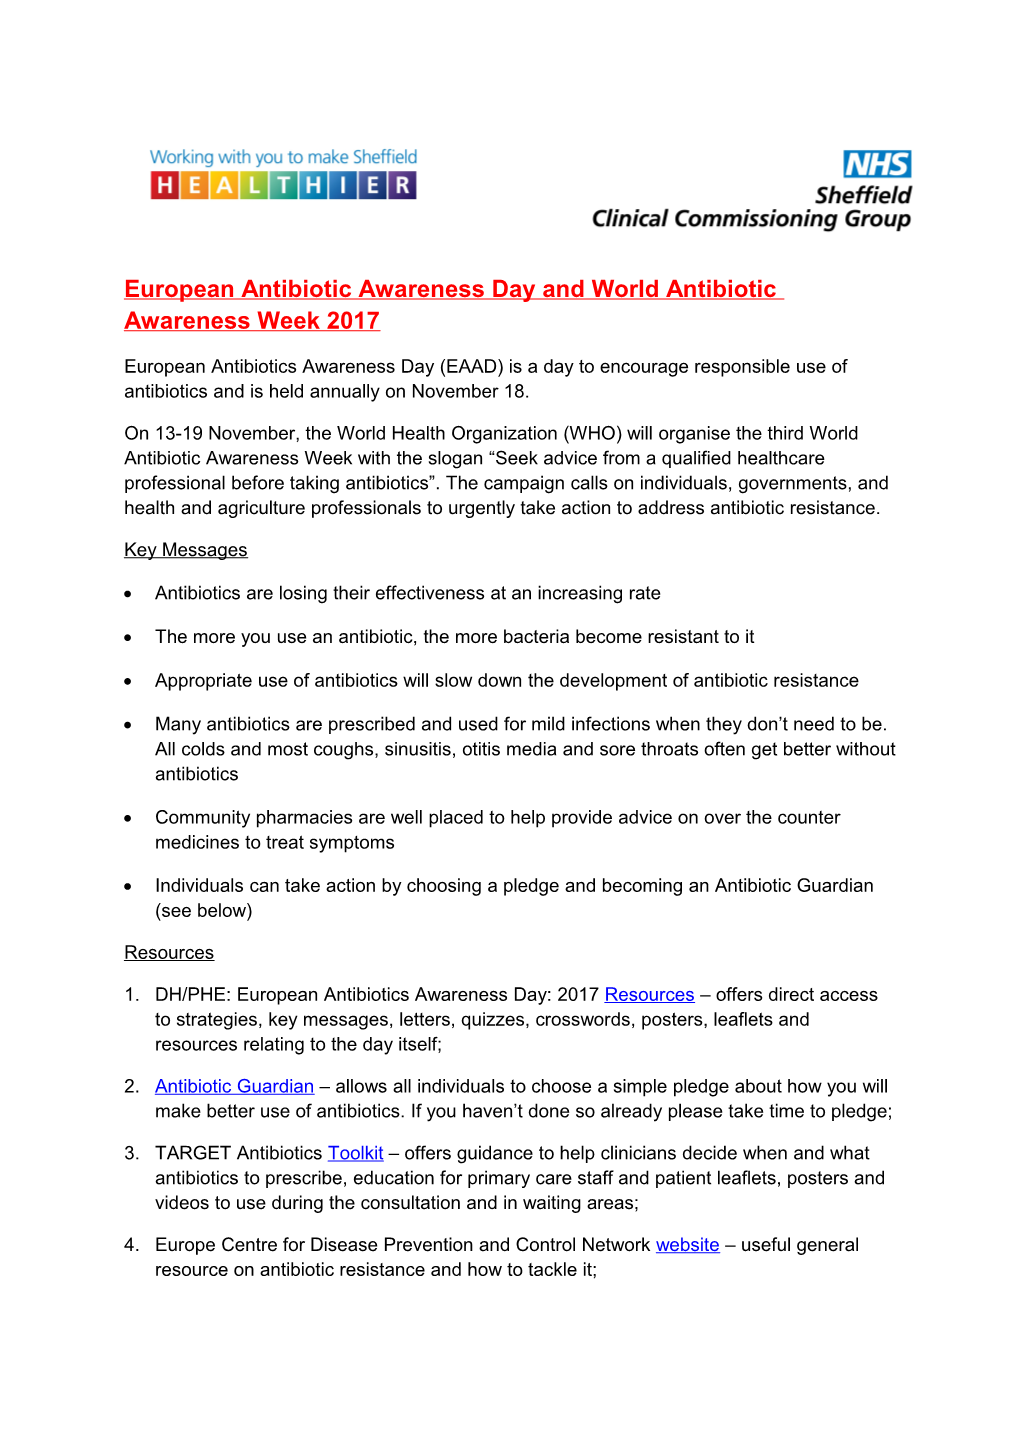 European Antibiotic Awareness Day and World Antibiotic Awareness Week 2017